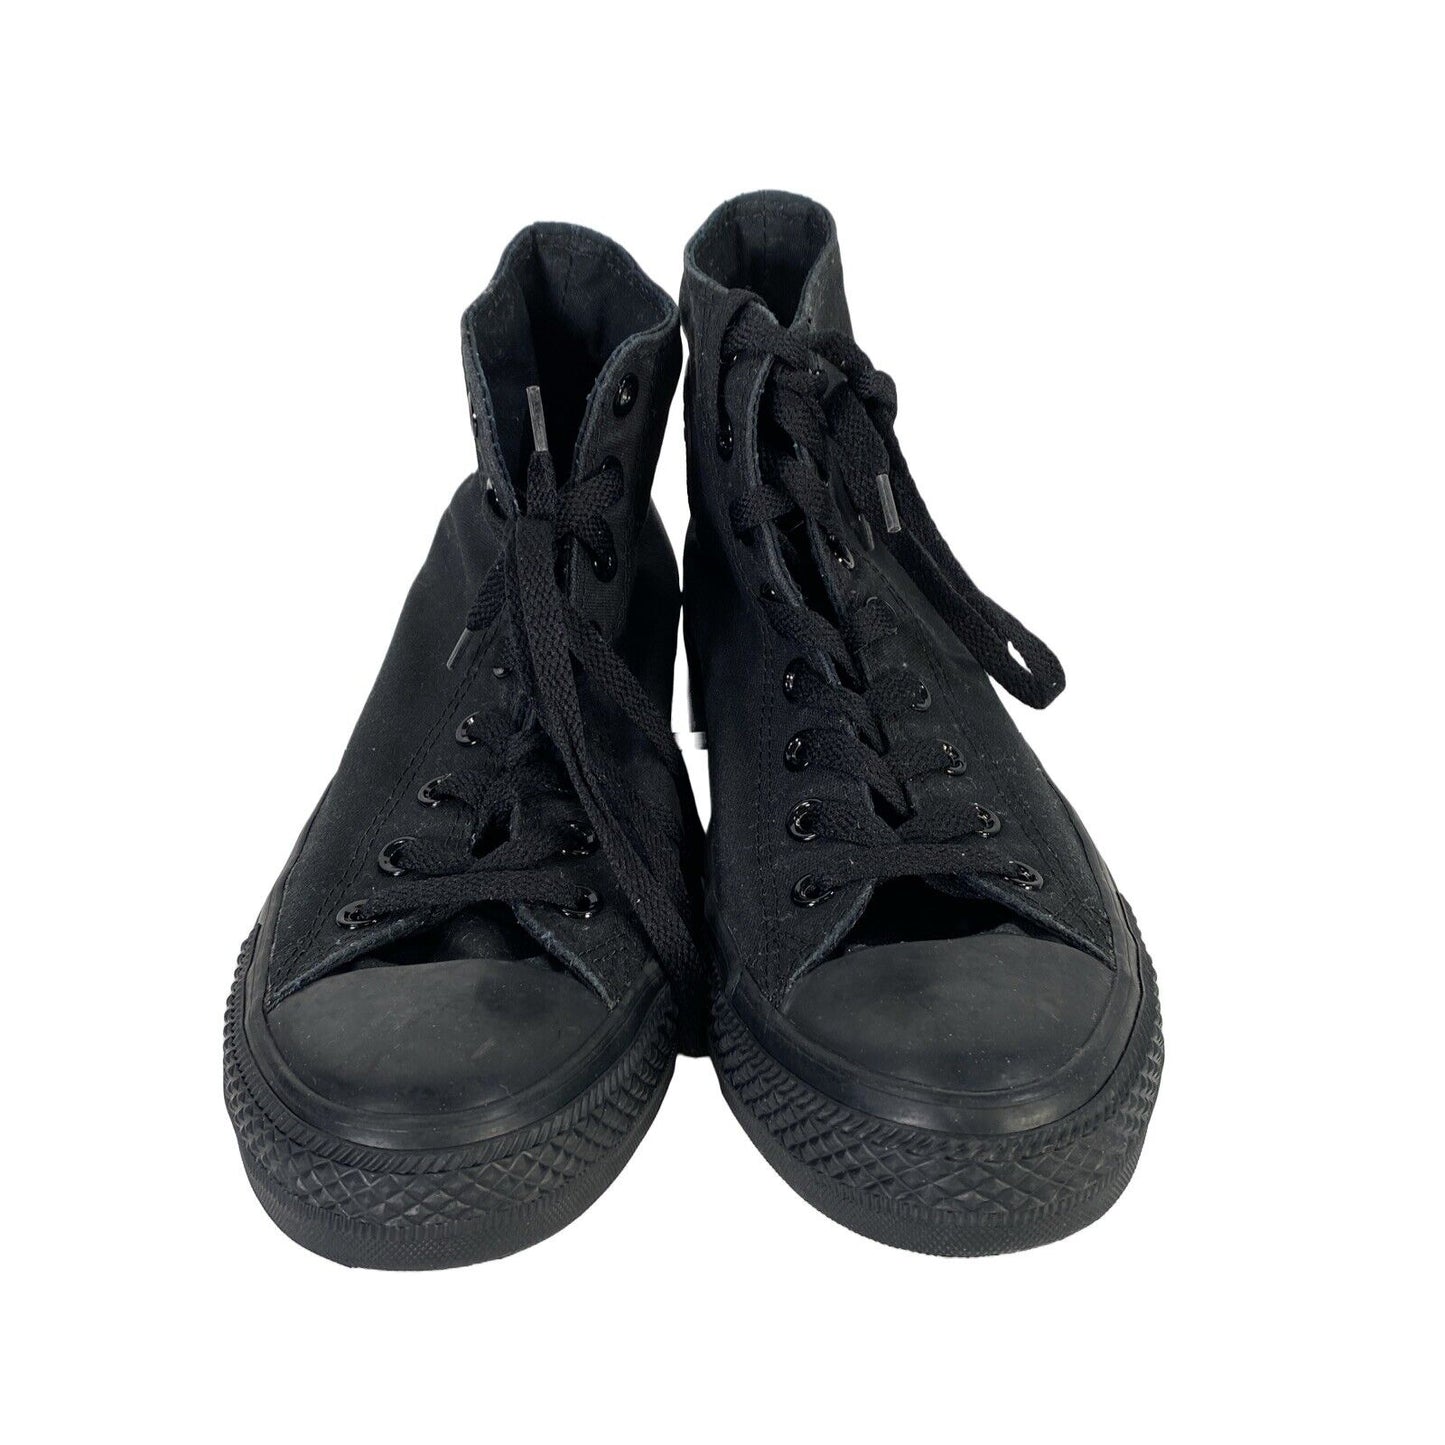 Converse Unisex Black Canvas Lace Up High Top Sneakers - Men's 9